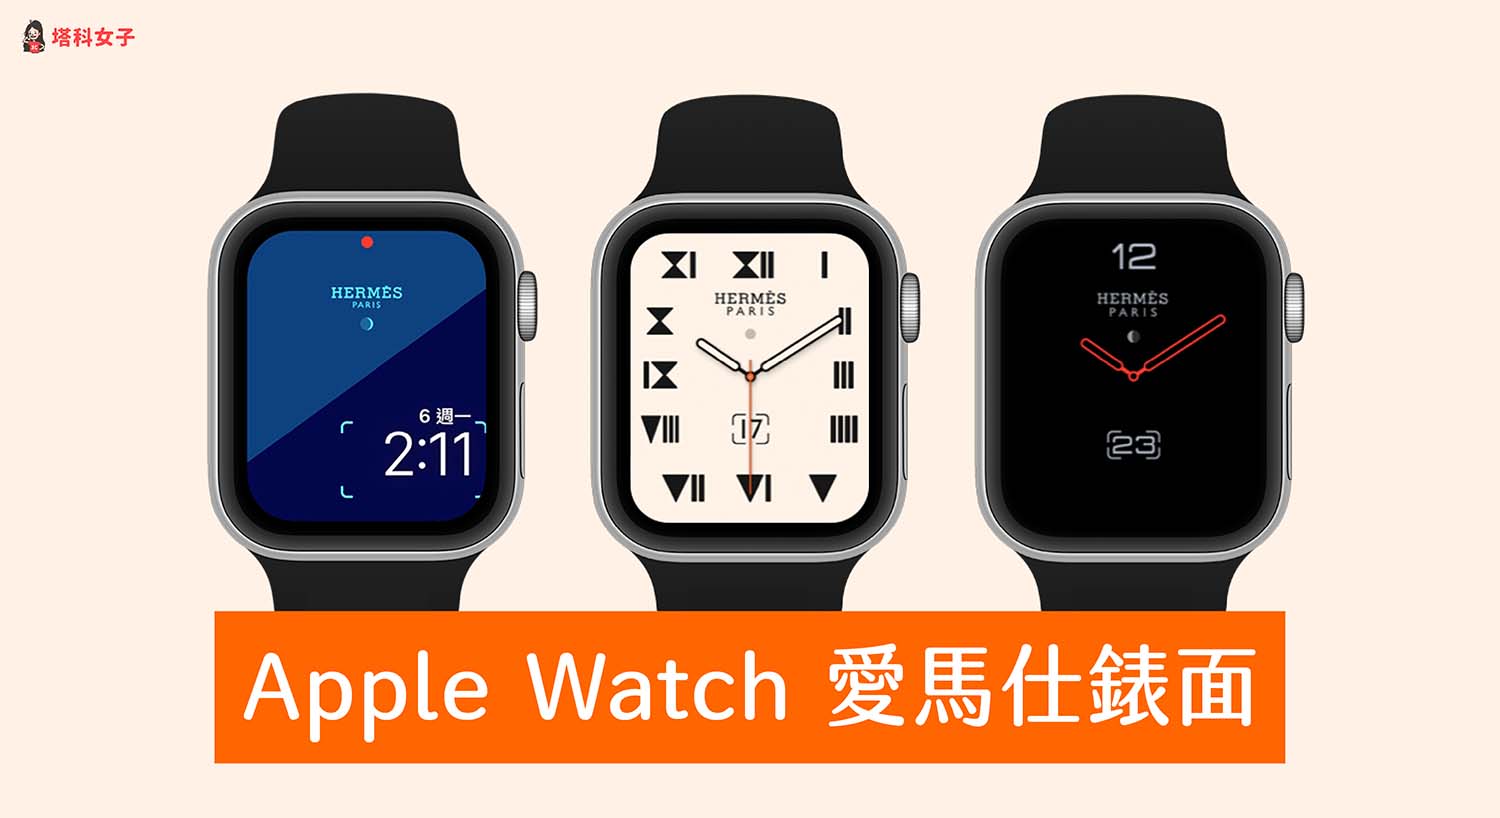 Apple Watch 錶面哪裡下載？推薦 2 個錶面網站免費下載 - Apple Watch 錶面, Apple Watch錶面, Apple Watch錶面分享 - 塔科女子